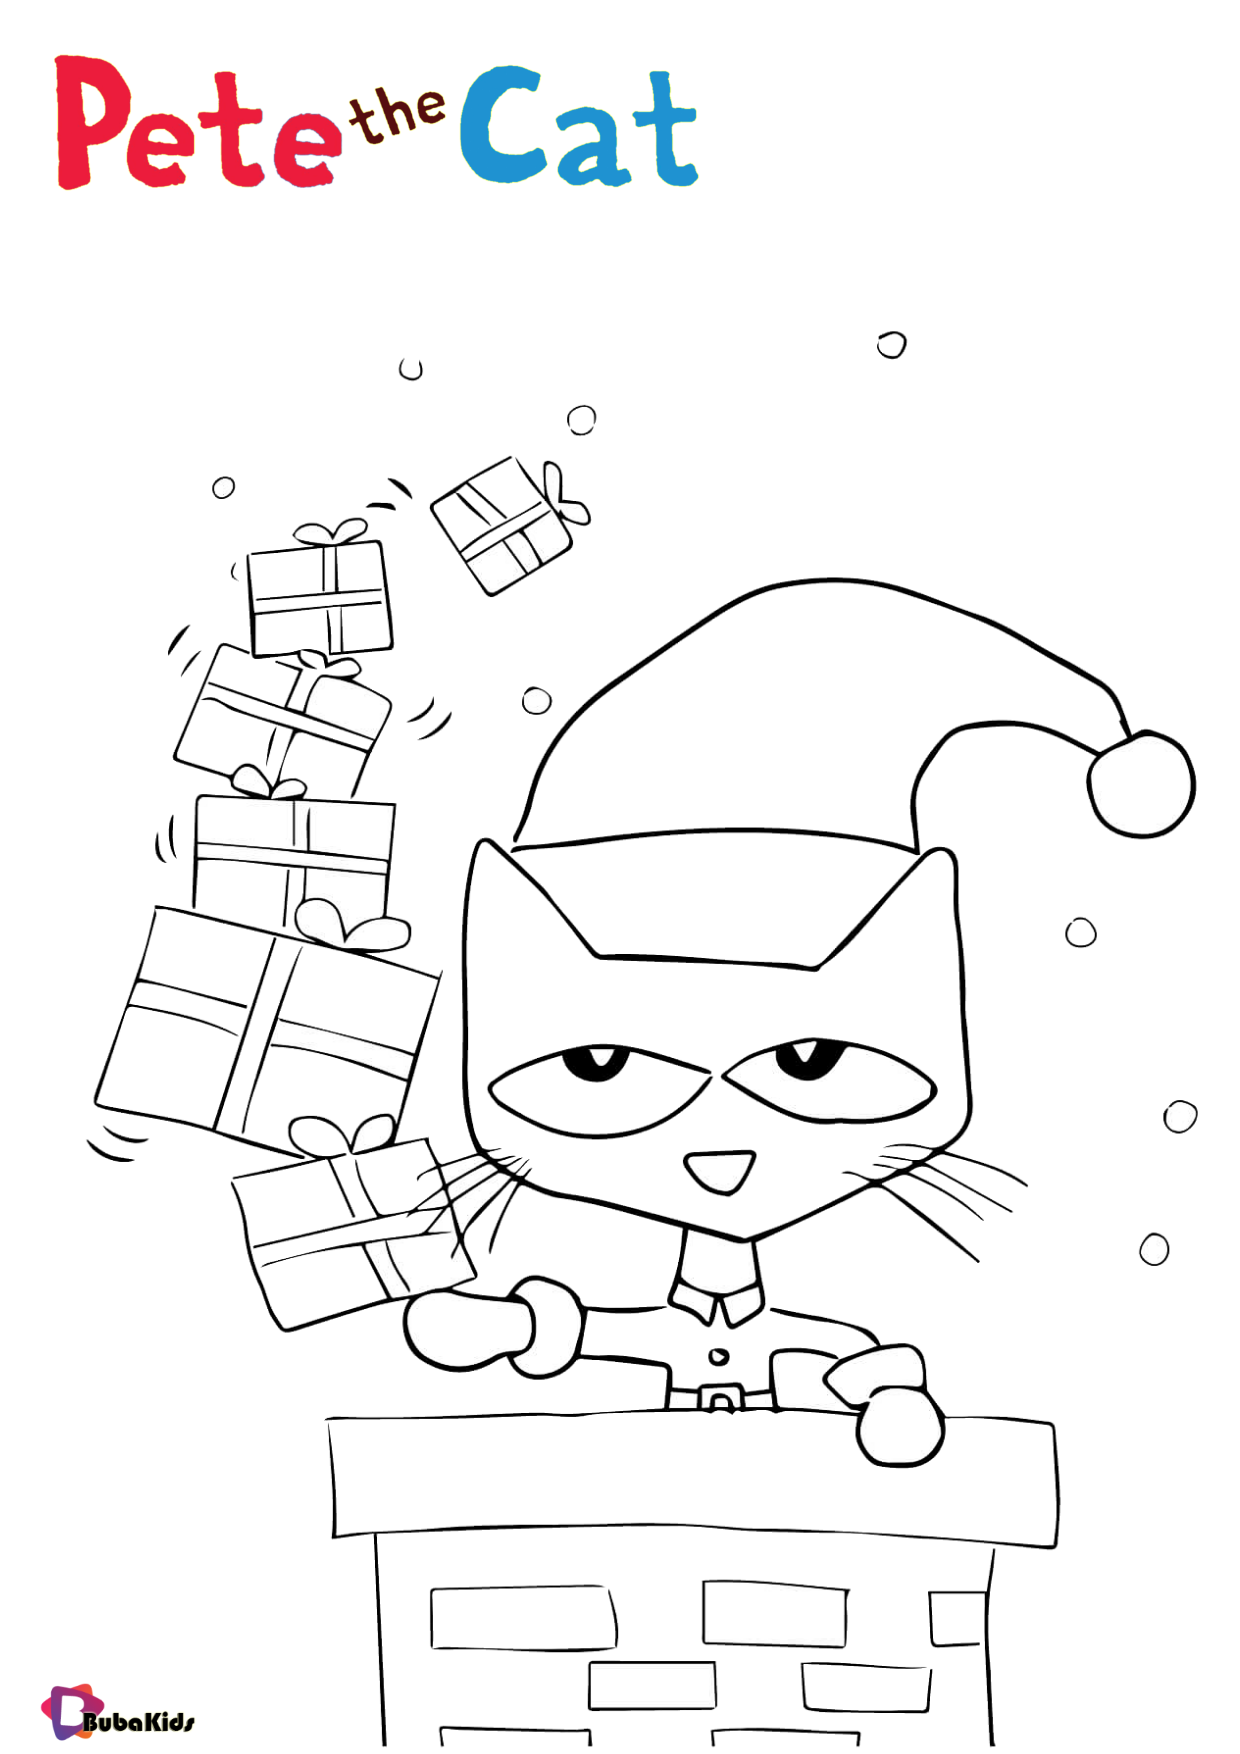 Pete the Cat Cartoon Cat Christmas coloring page bubakids.com Wallpaper